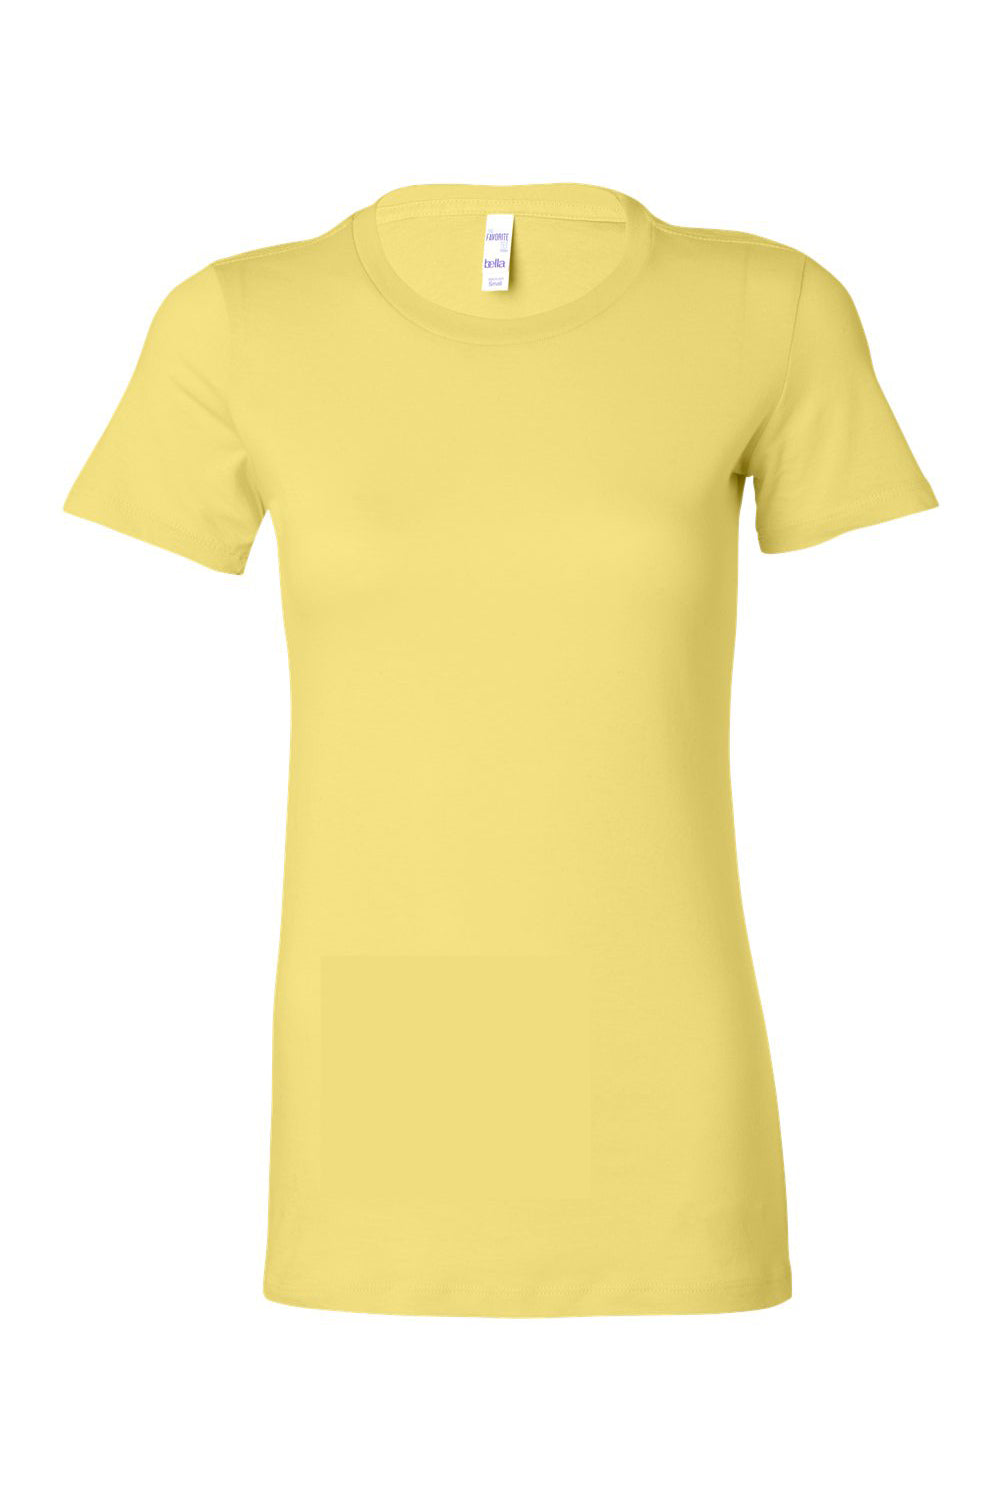 Bella + Canvas BC6004/6004 Womens The Favorite Short Sleeve Crewneck T-Shirt Yellow Flat Front